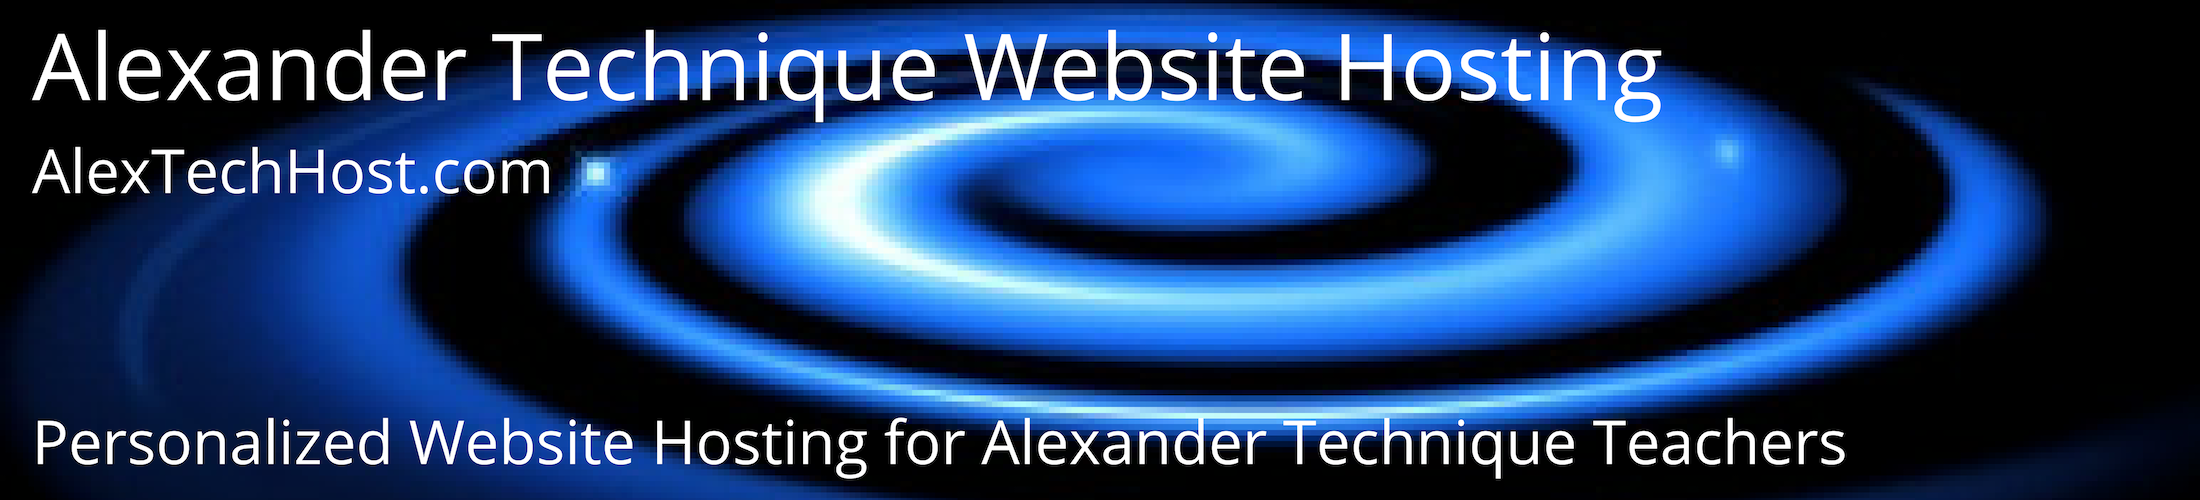 Alexander Technique Website Hosting